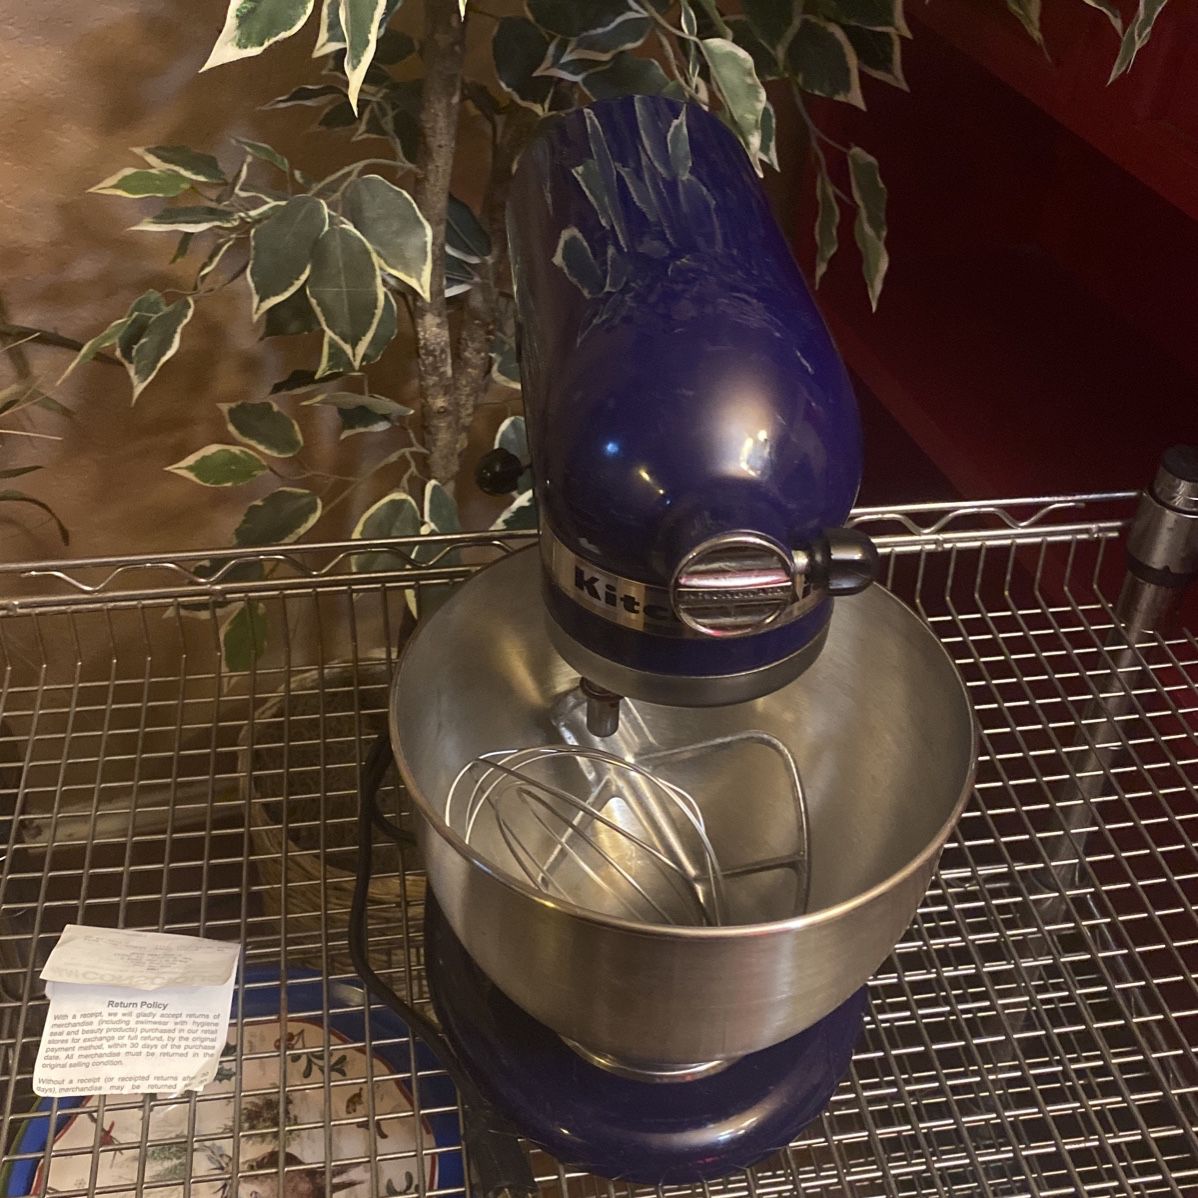 KitchenAid 5.5 Quart Bowl-Lift Stand Mixer - Ink Blue